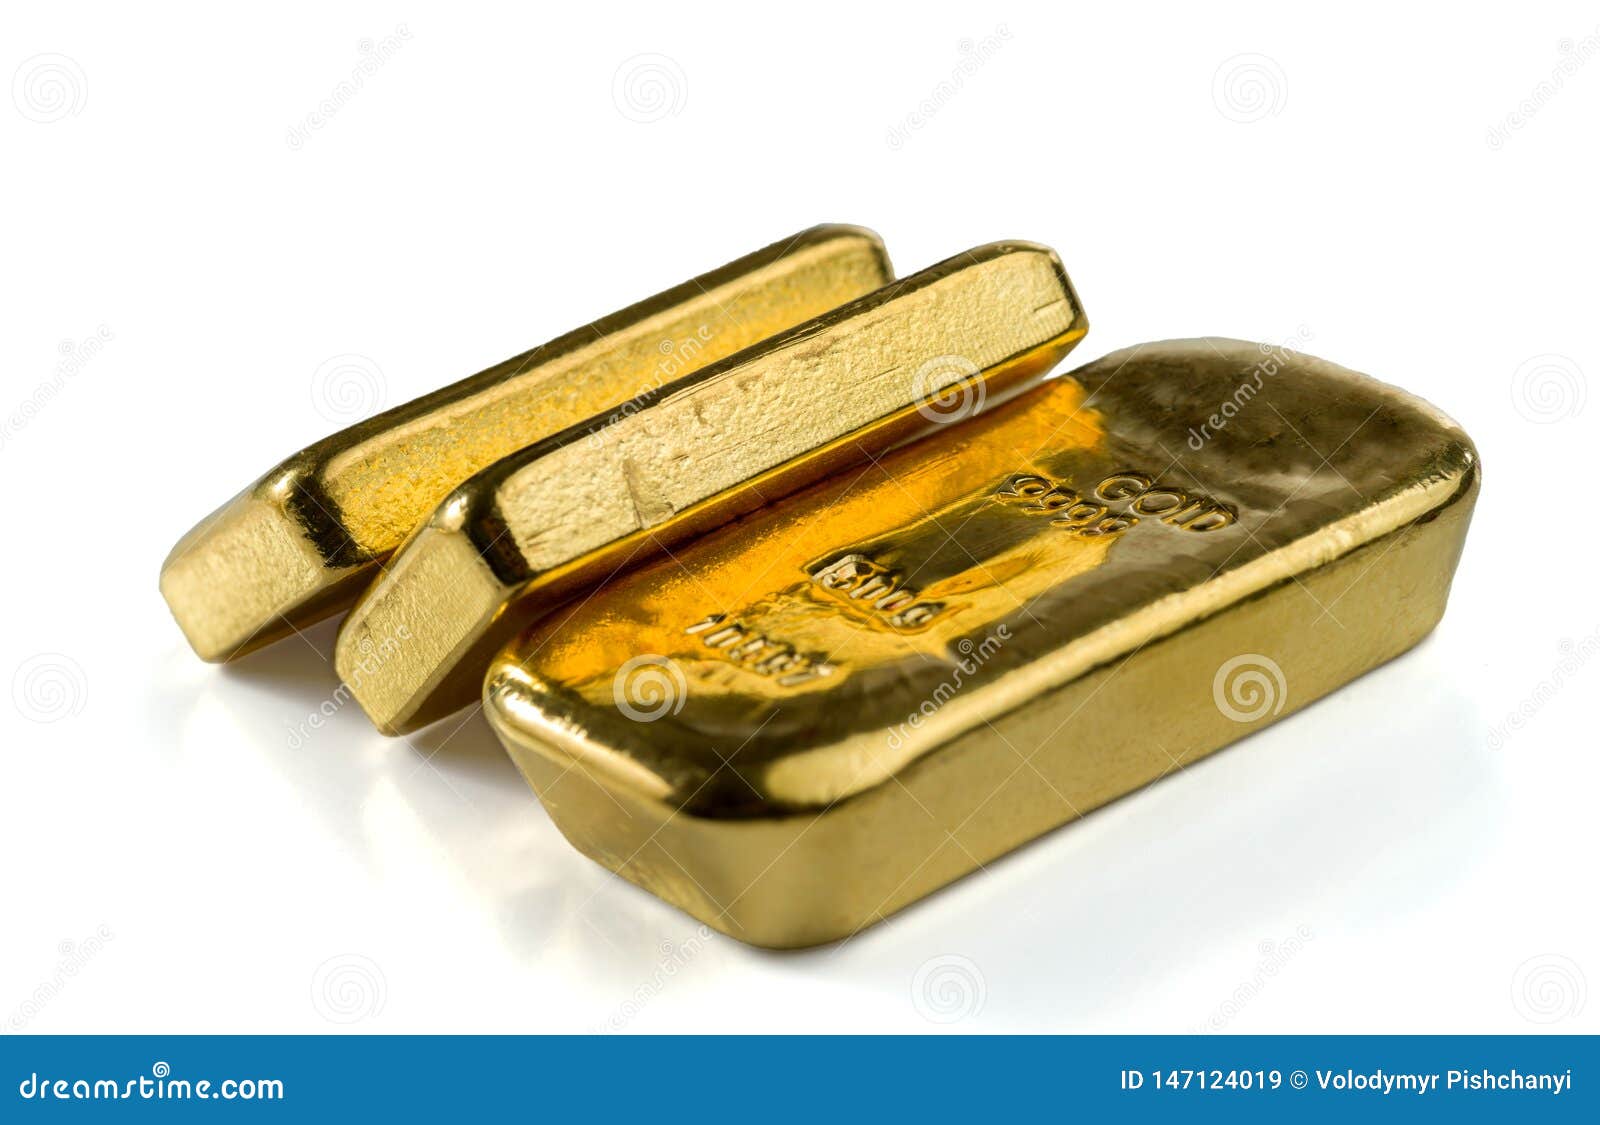 three cast gold bars, the typical form of bullion gold bullion.